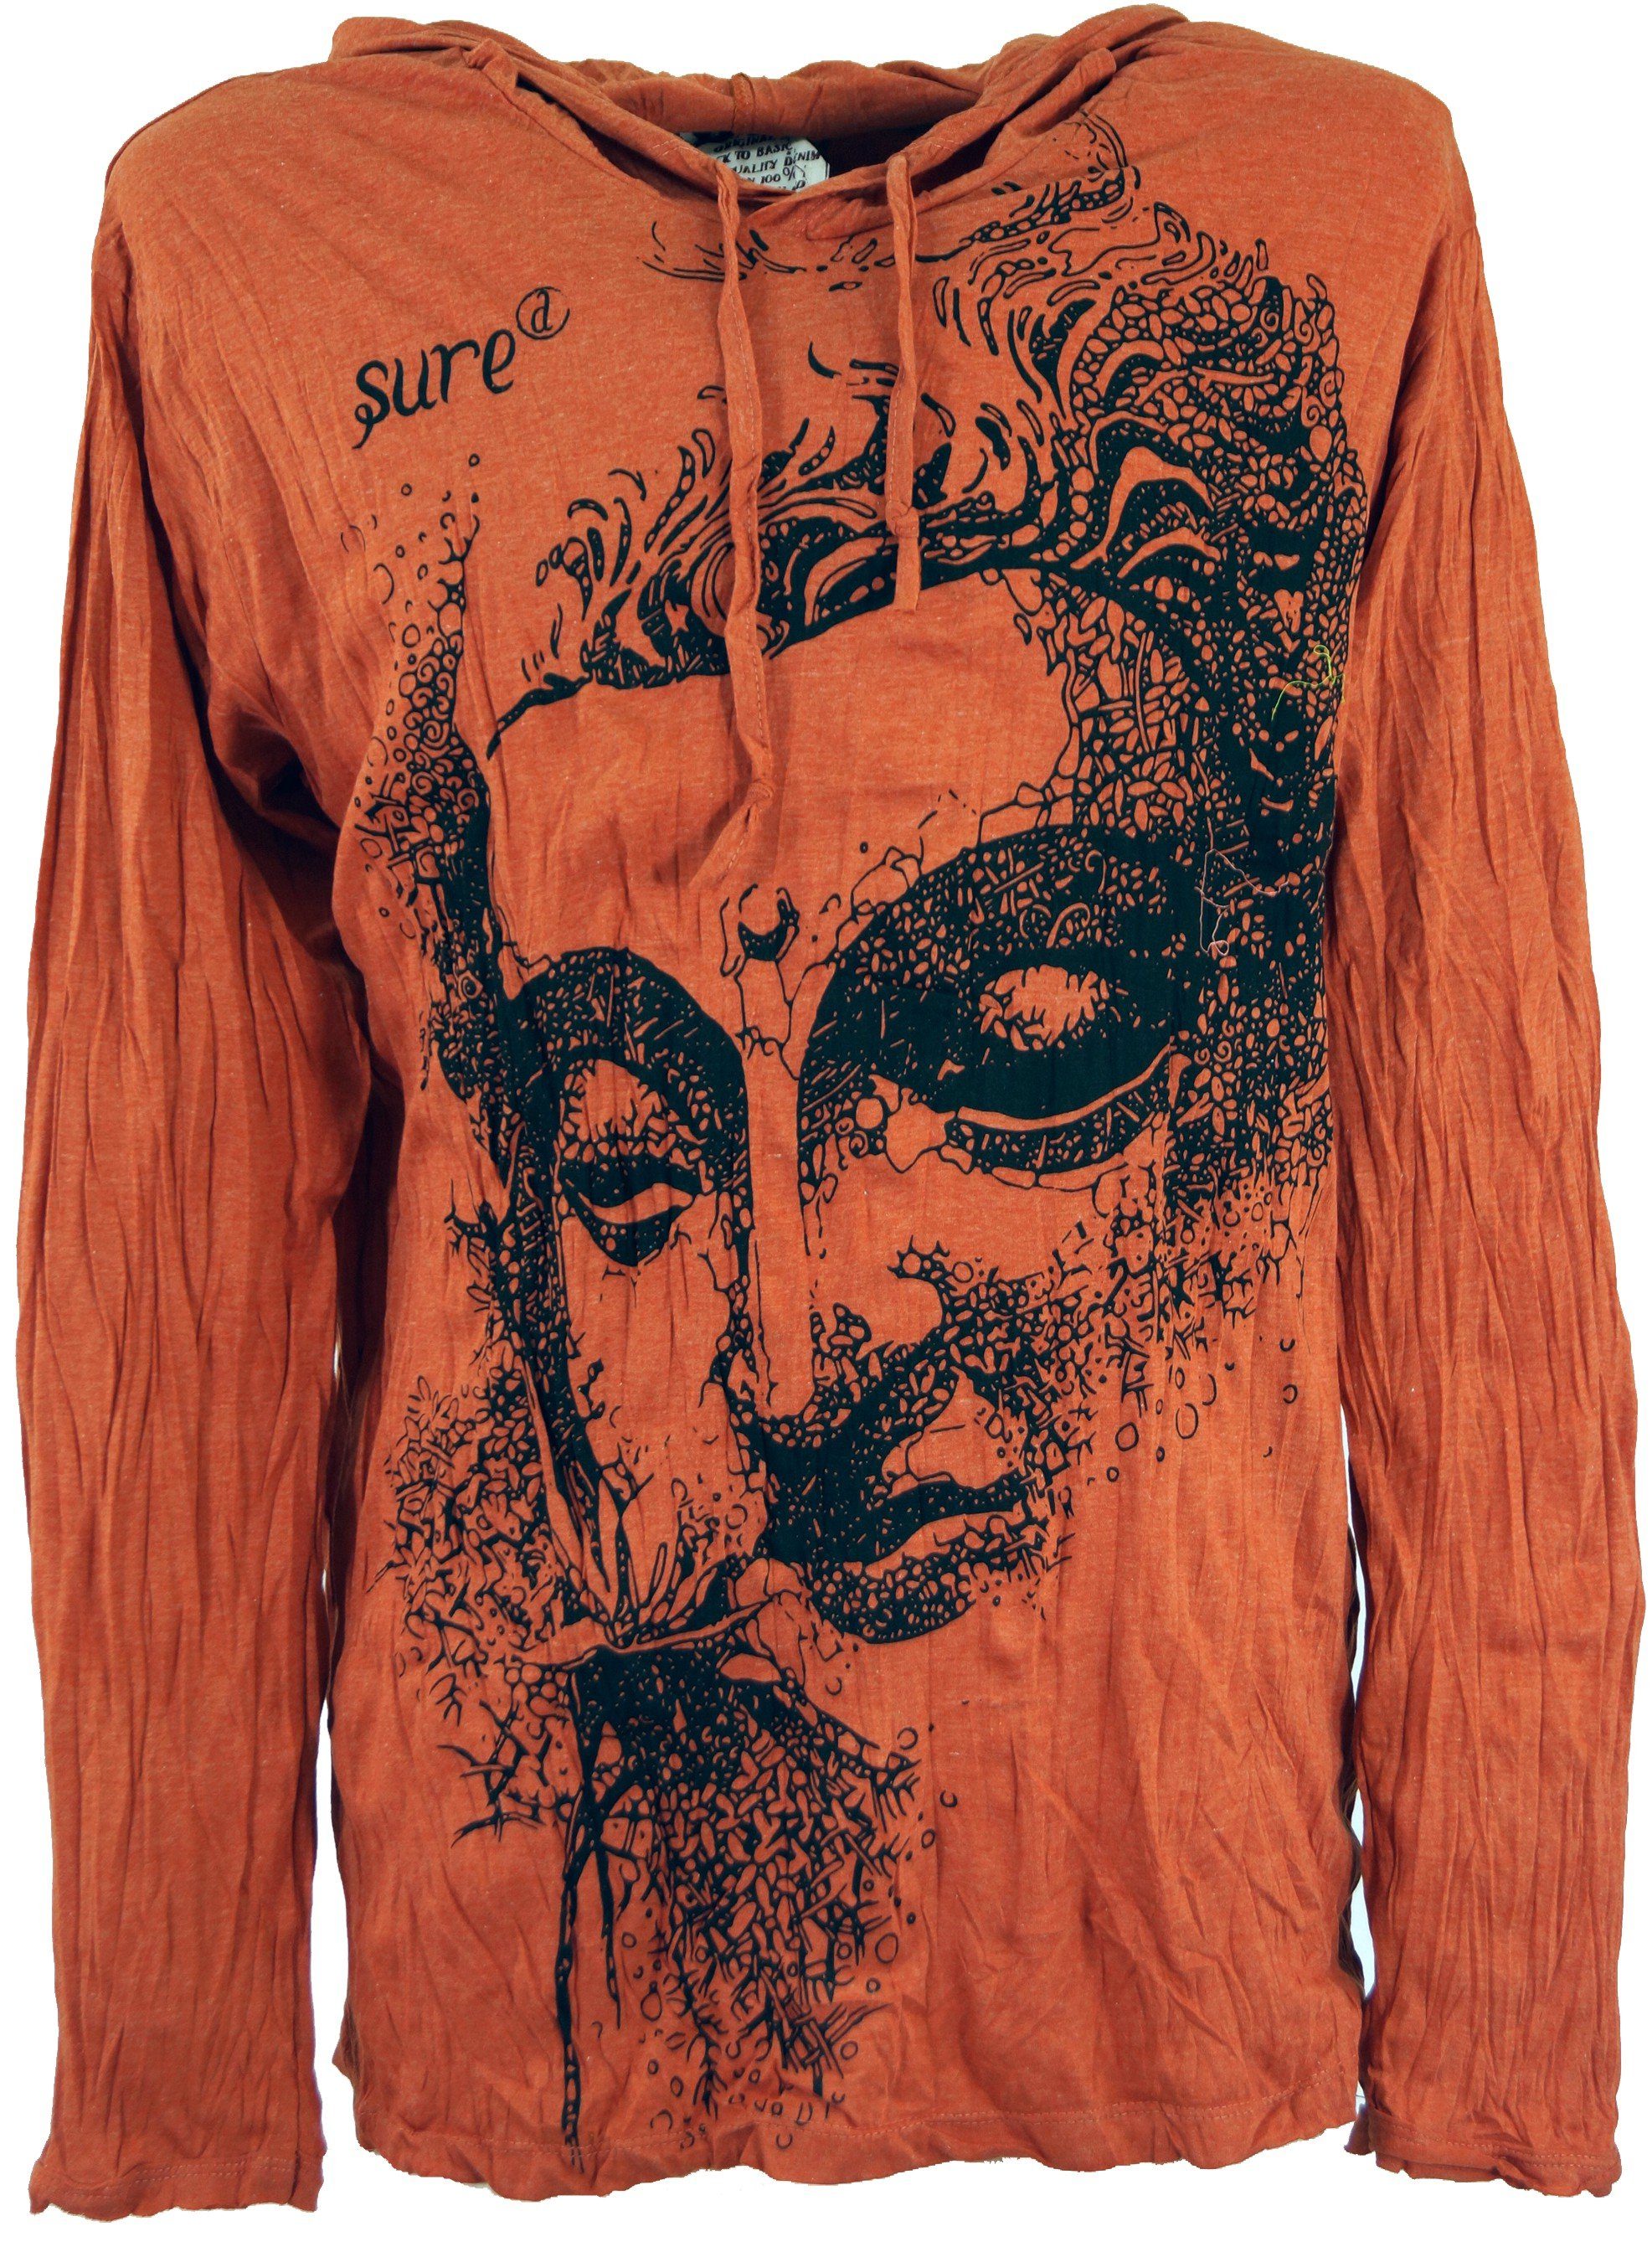 Guru-Shop T-Shirt Style, alternative Goa Bekleidung Kapuzenshirt Dreaming Buddha.. Festival, rostorange Langarmshirt, Sure